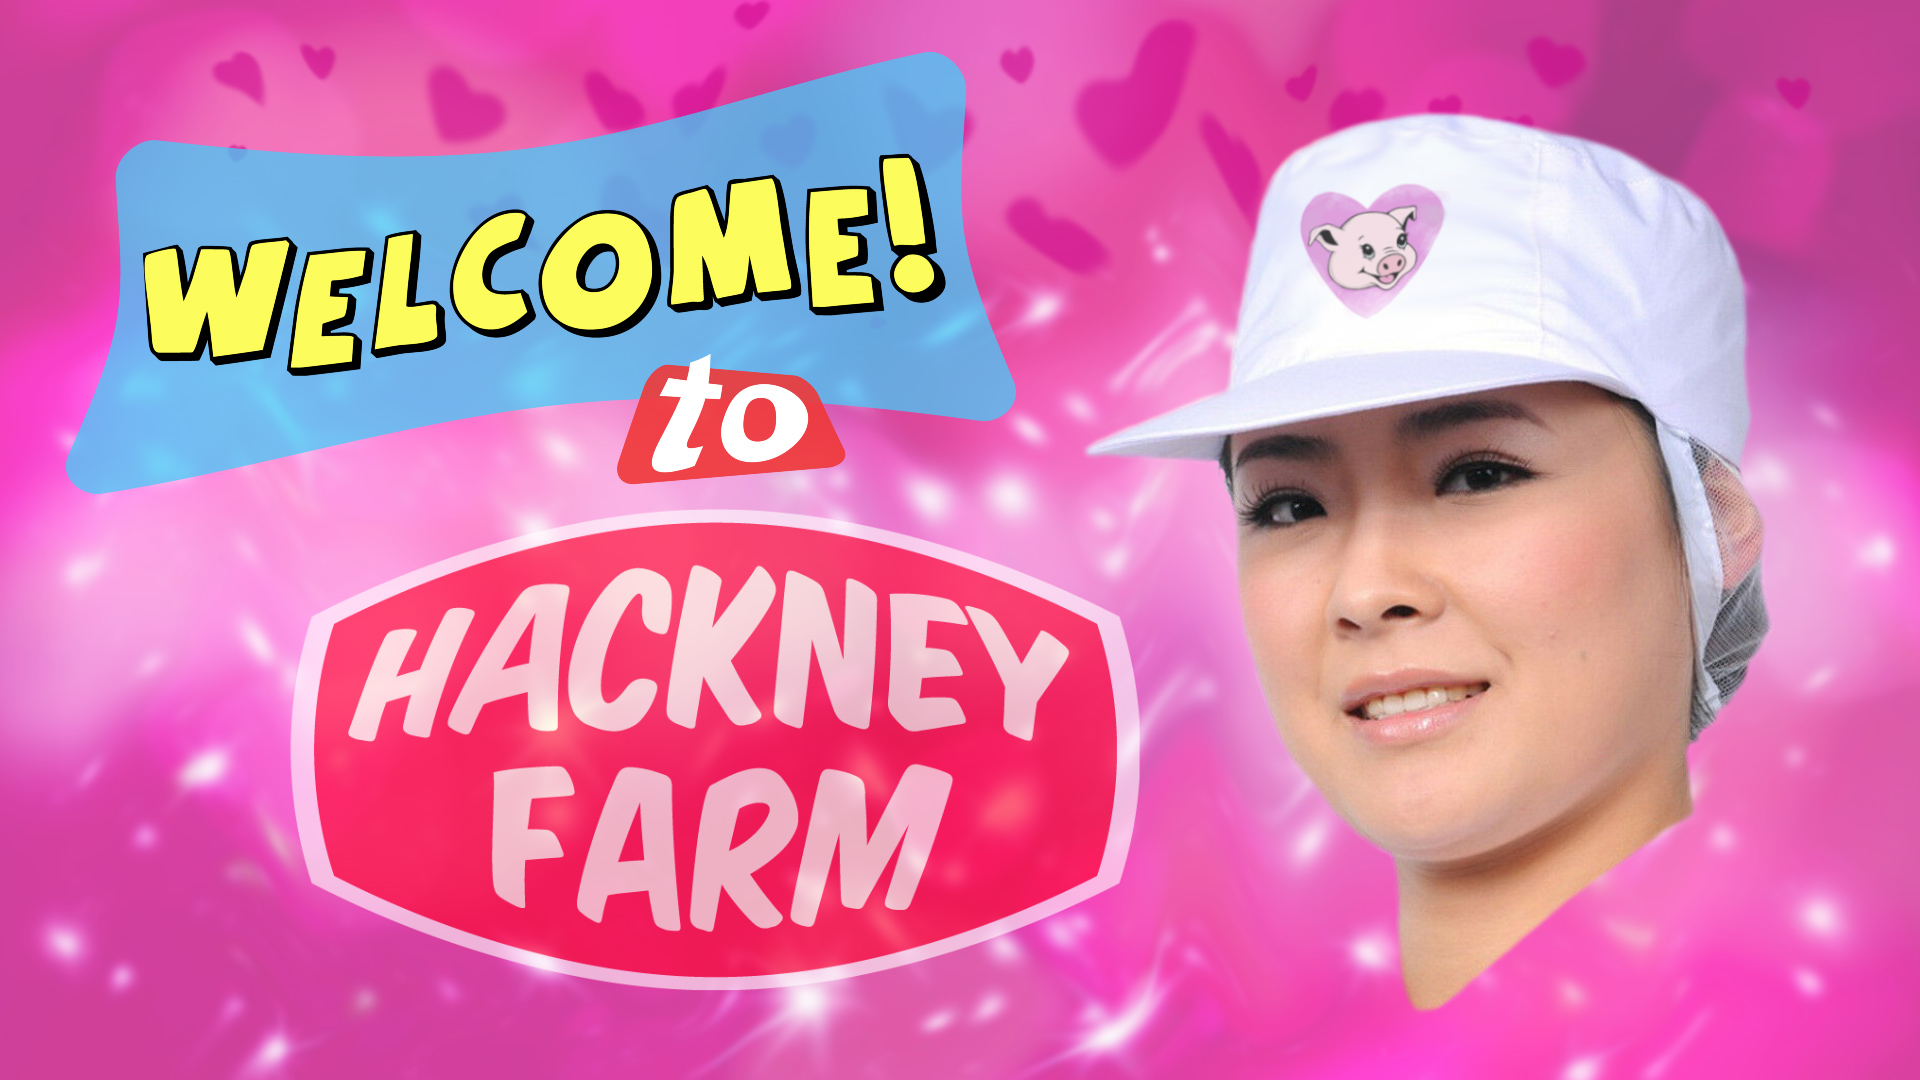  Hackney Farm | Welcome 